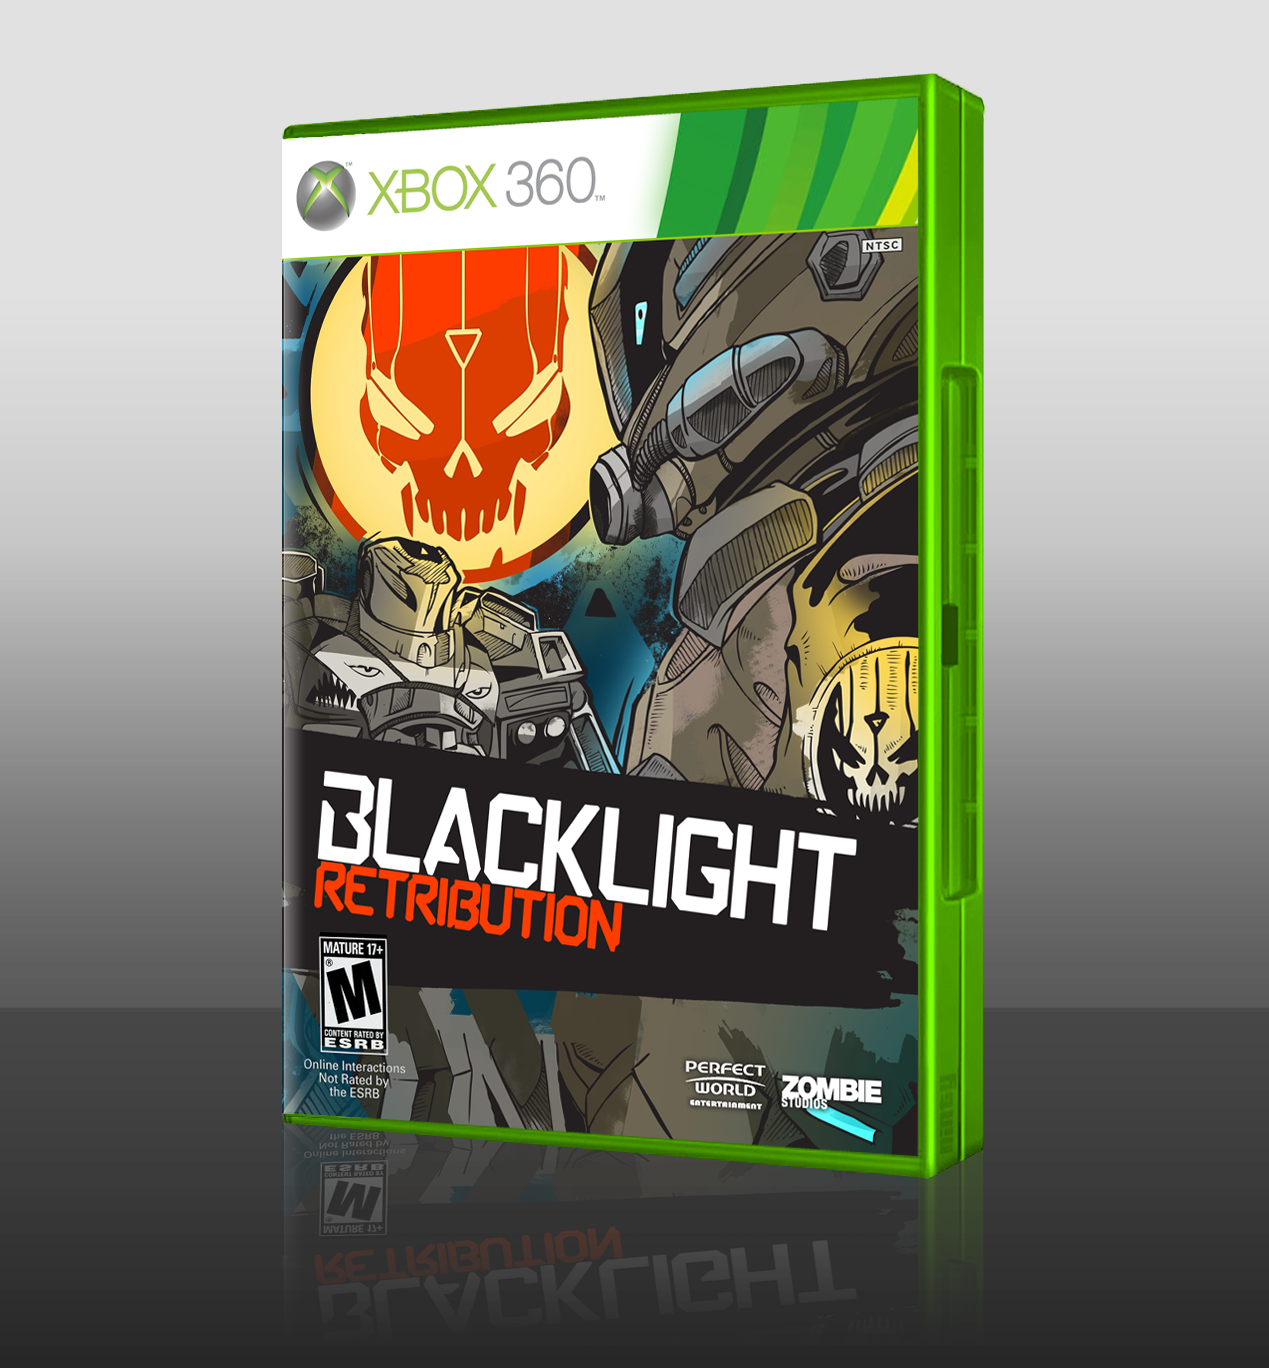 Blacklight Retribution box cover